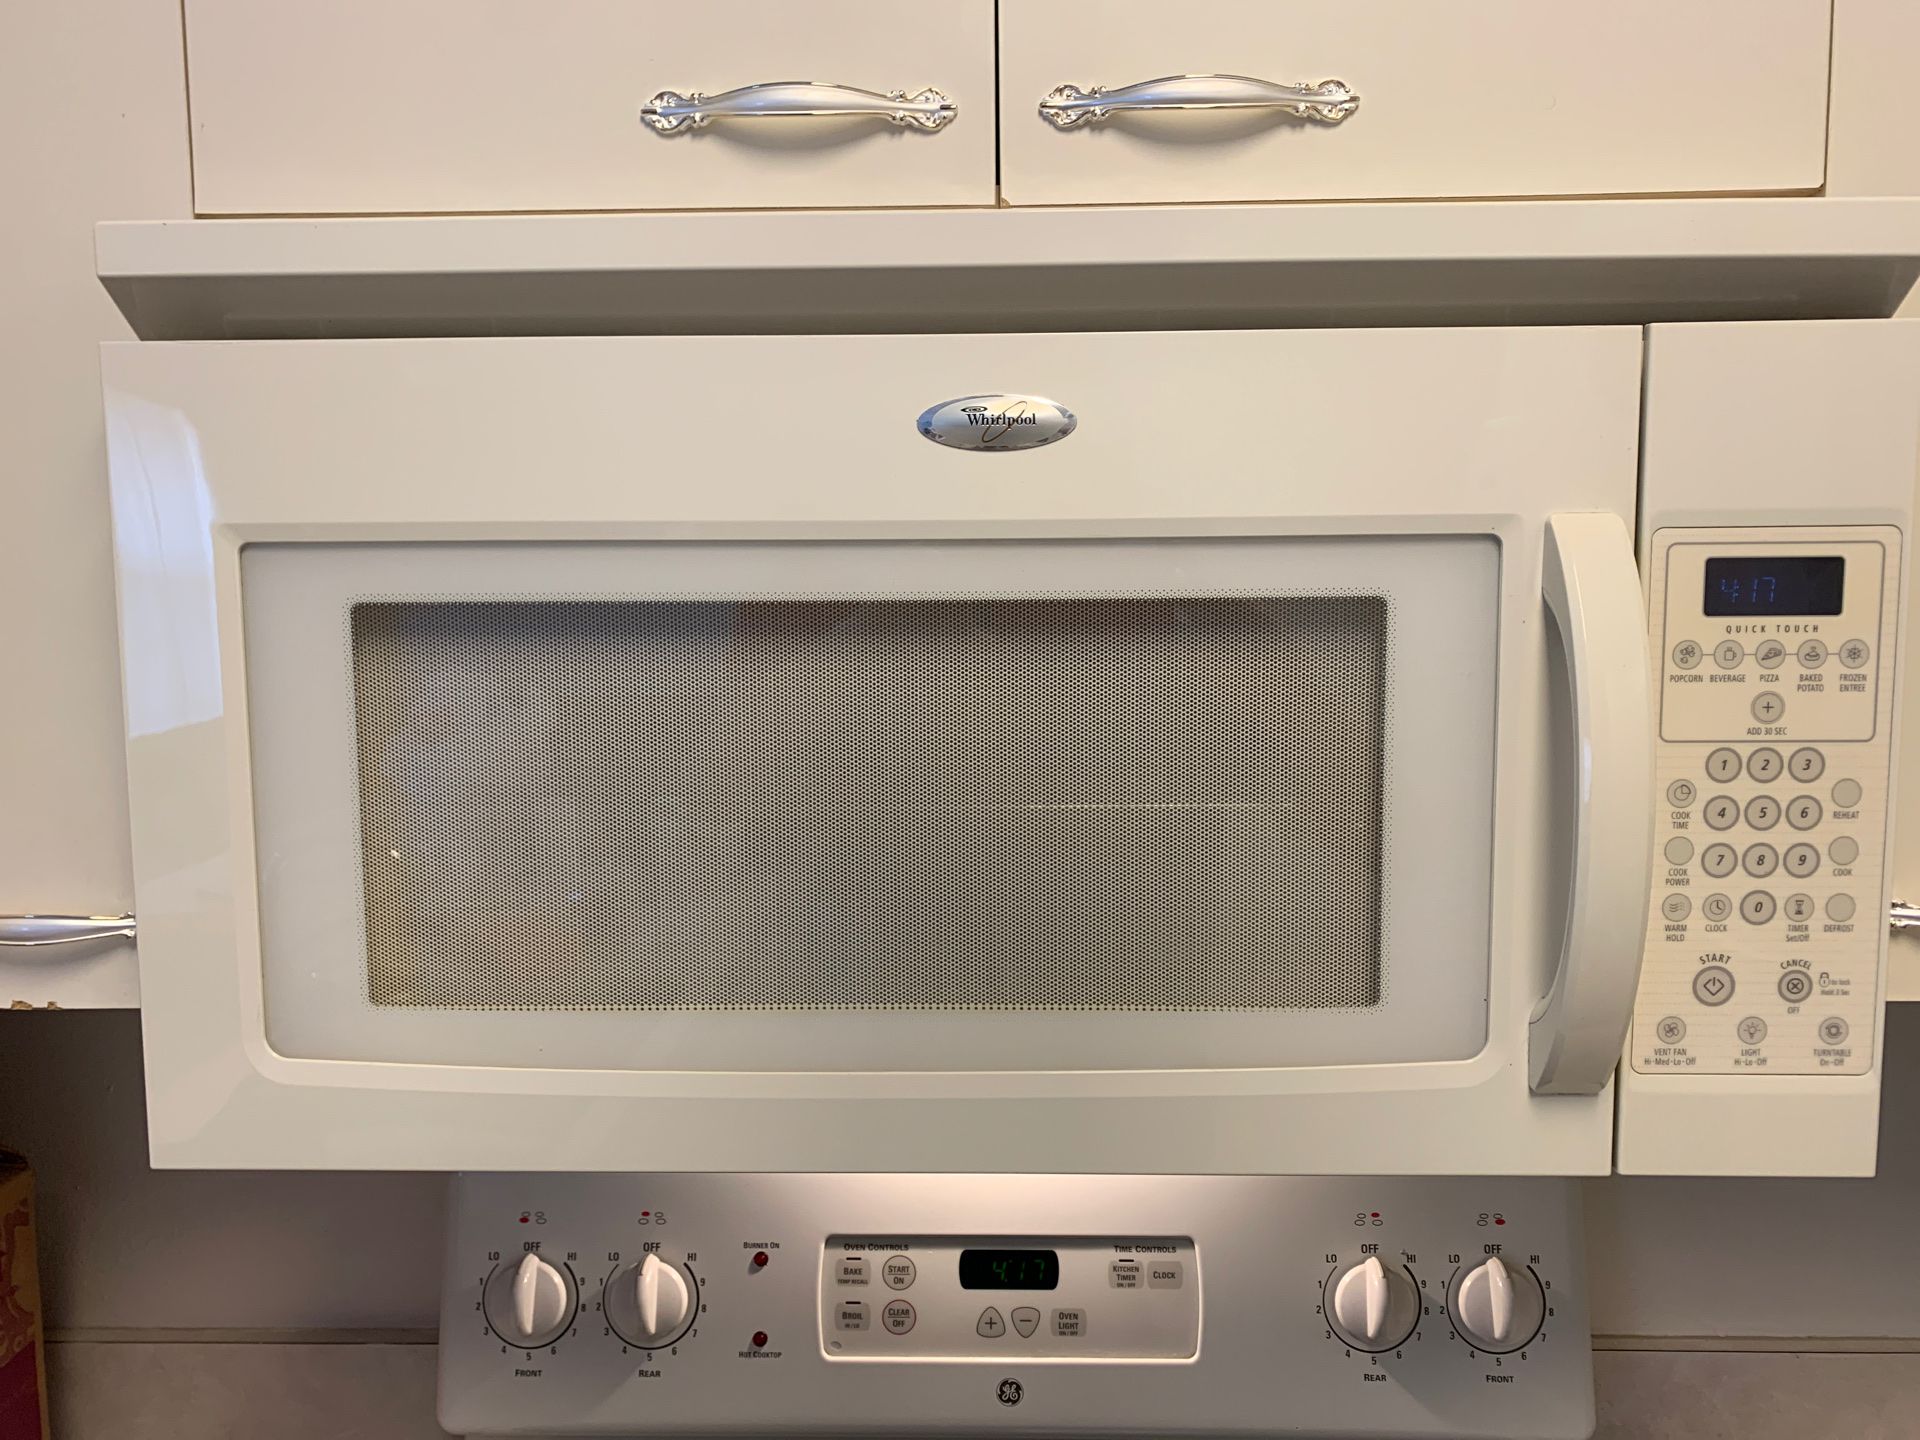 FREE/GRATIS Whirlpool microwave